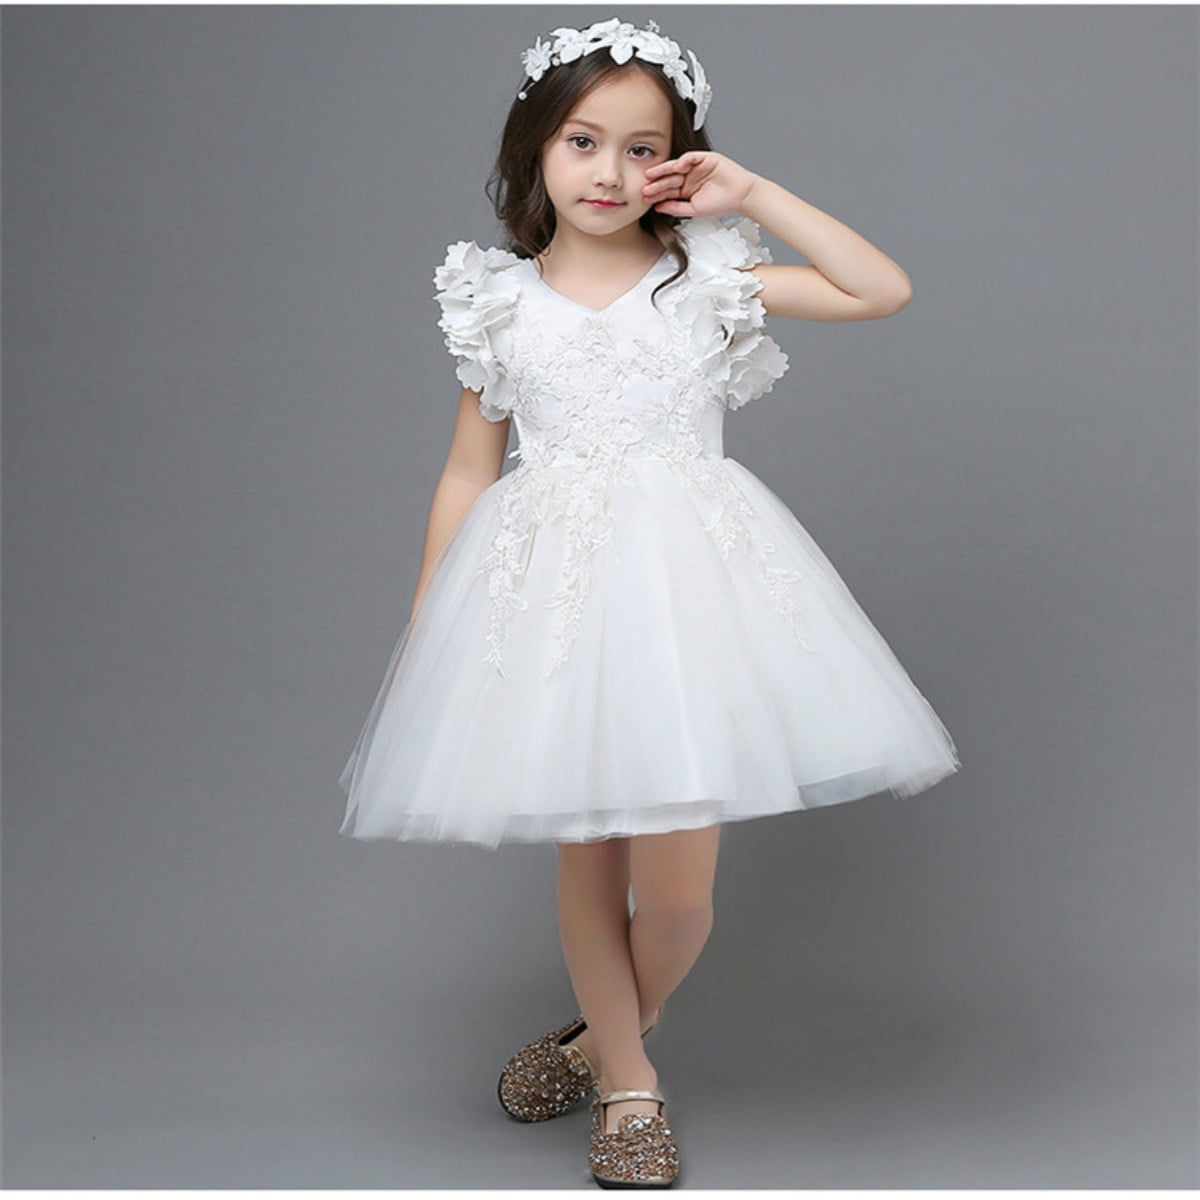 HAWEE Girl Dress Kids Ruffles Lace Party Wedding Bridesmaid Dresses Tutu  Flower Girls Dress for Age 3-12 Years